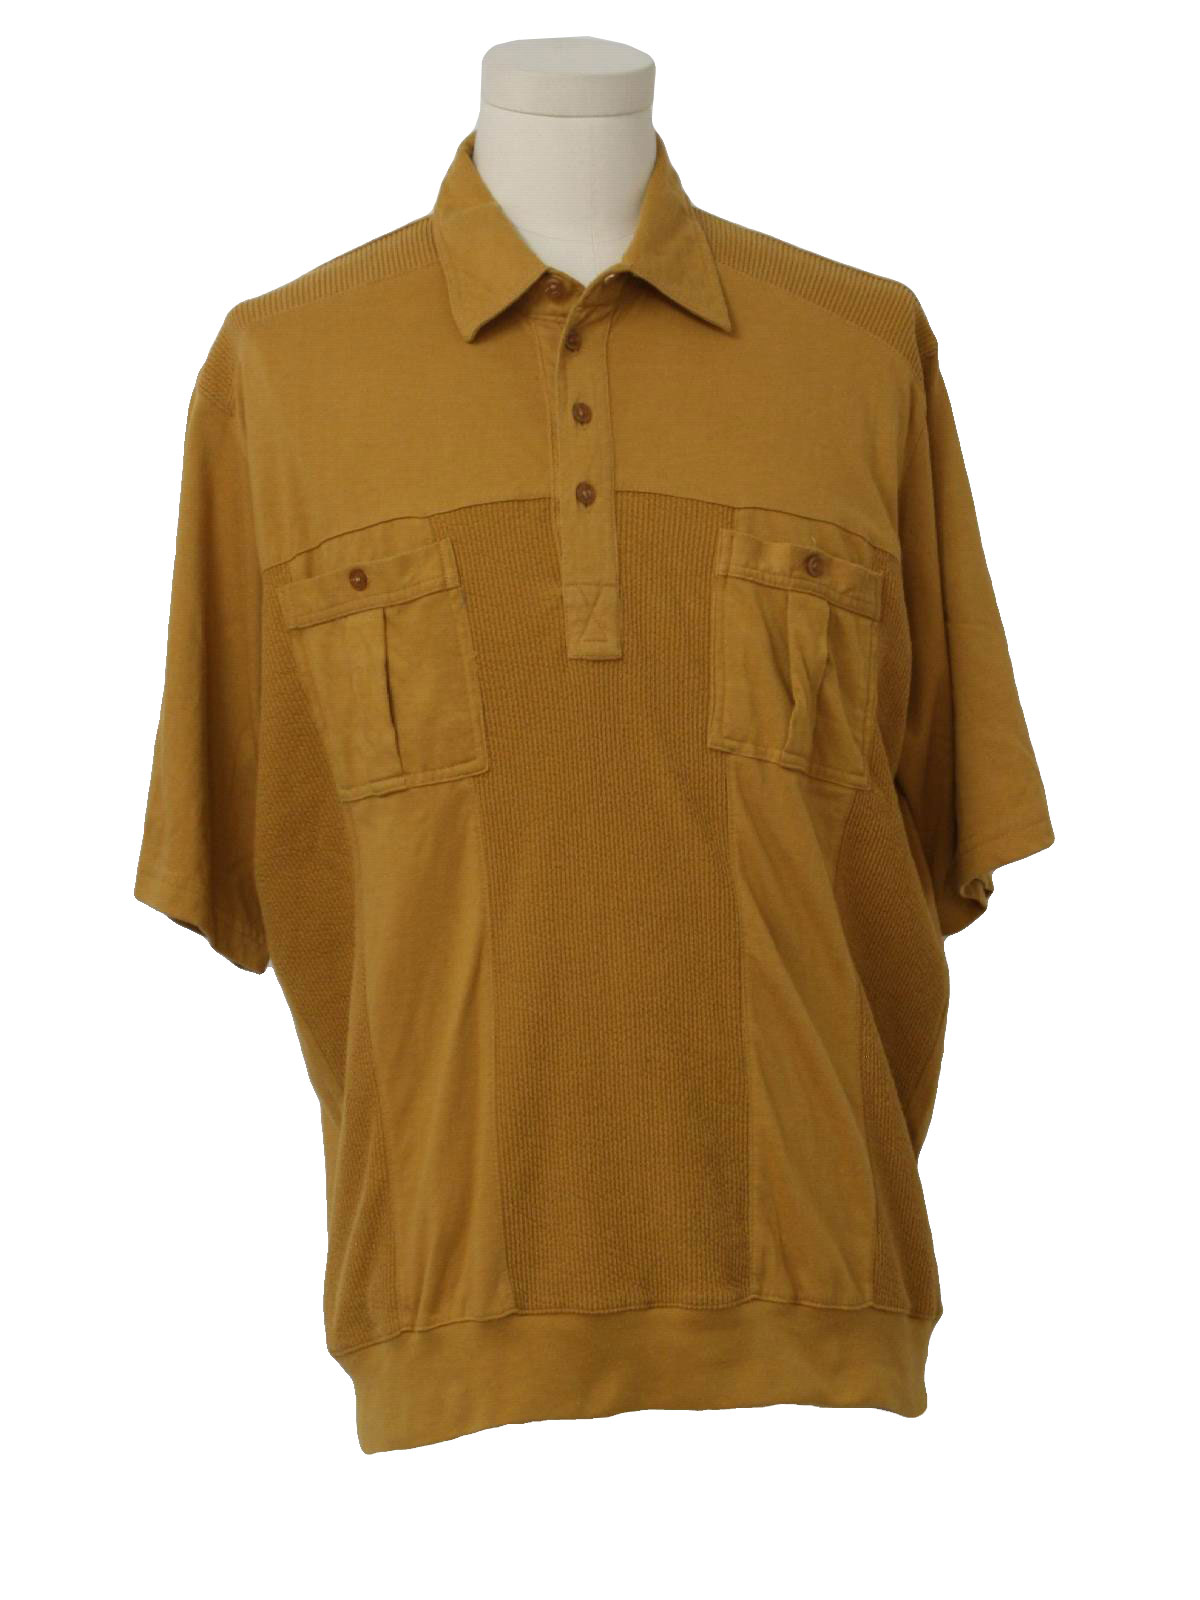 Retro Eighties T Shirt: Early 80s -Haband Casual Joe- Mens camel gold ...